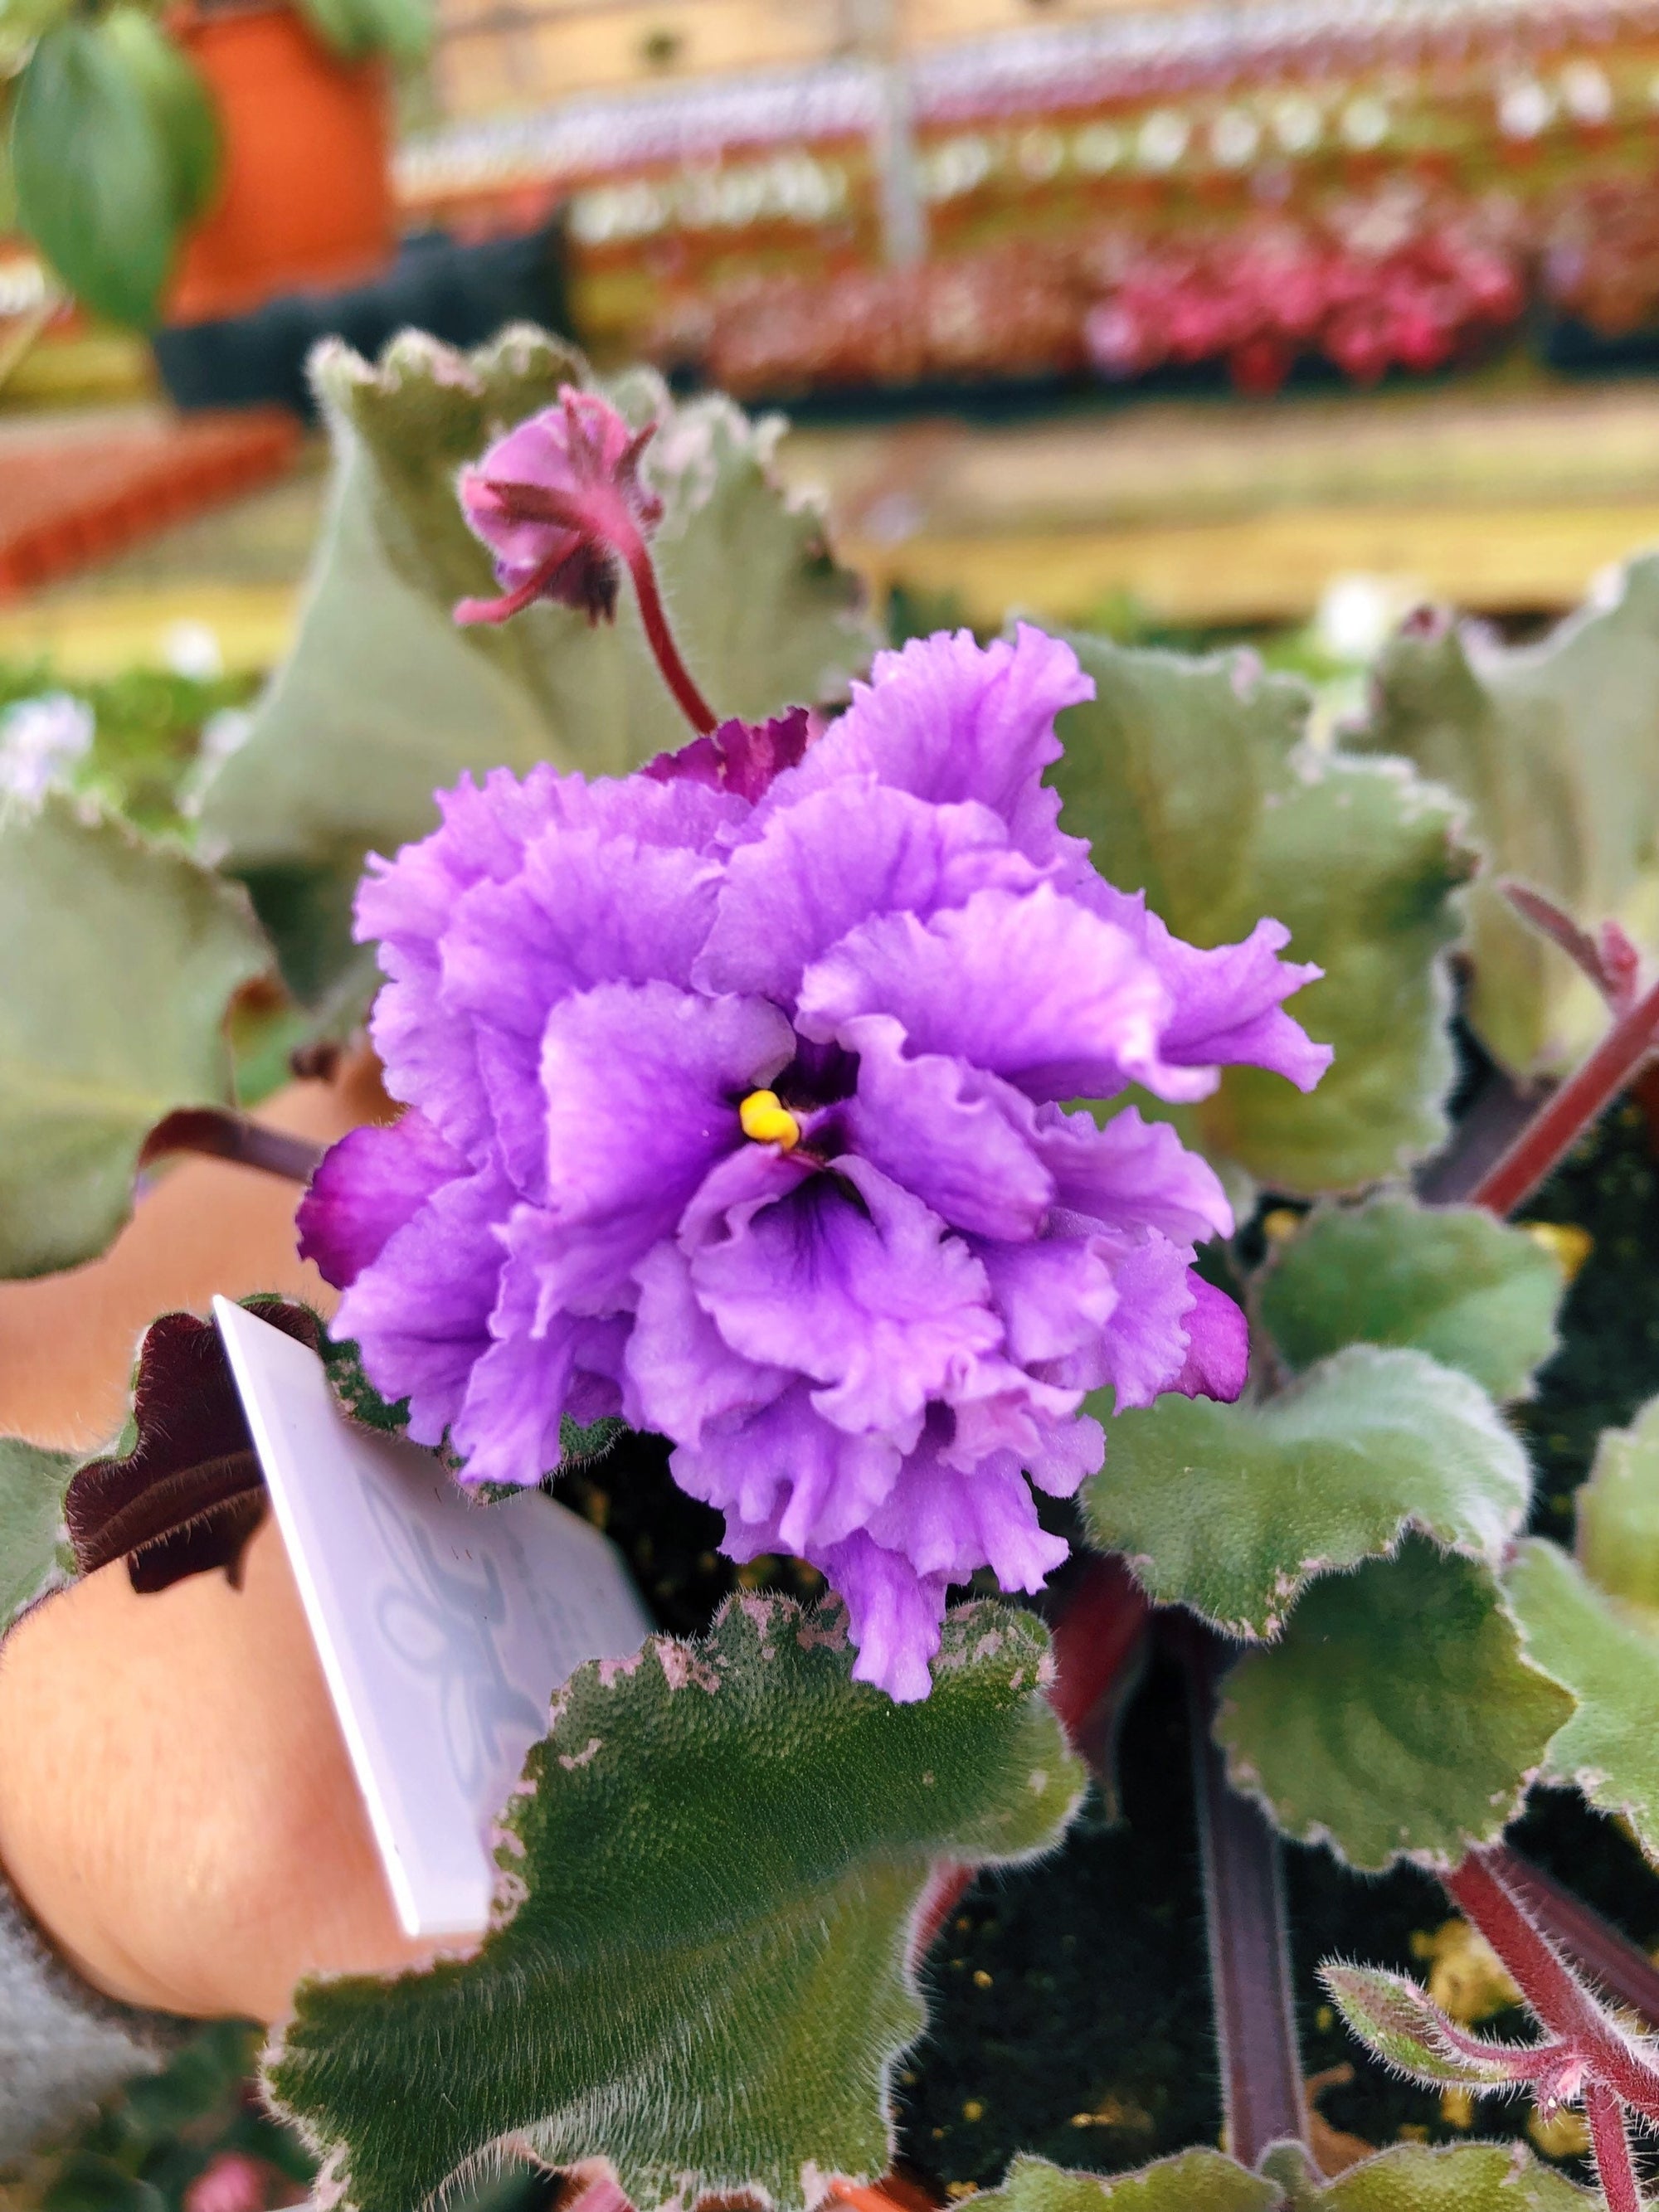 Live house plant bloom African Violet Harmony’s ‘Wrangler’s Winter Hawk’ garden 4” pot flower Potted gift